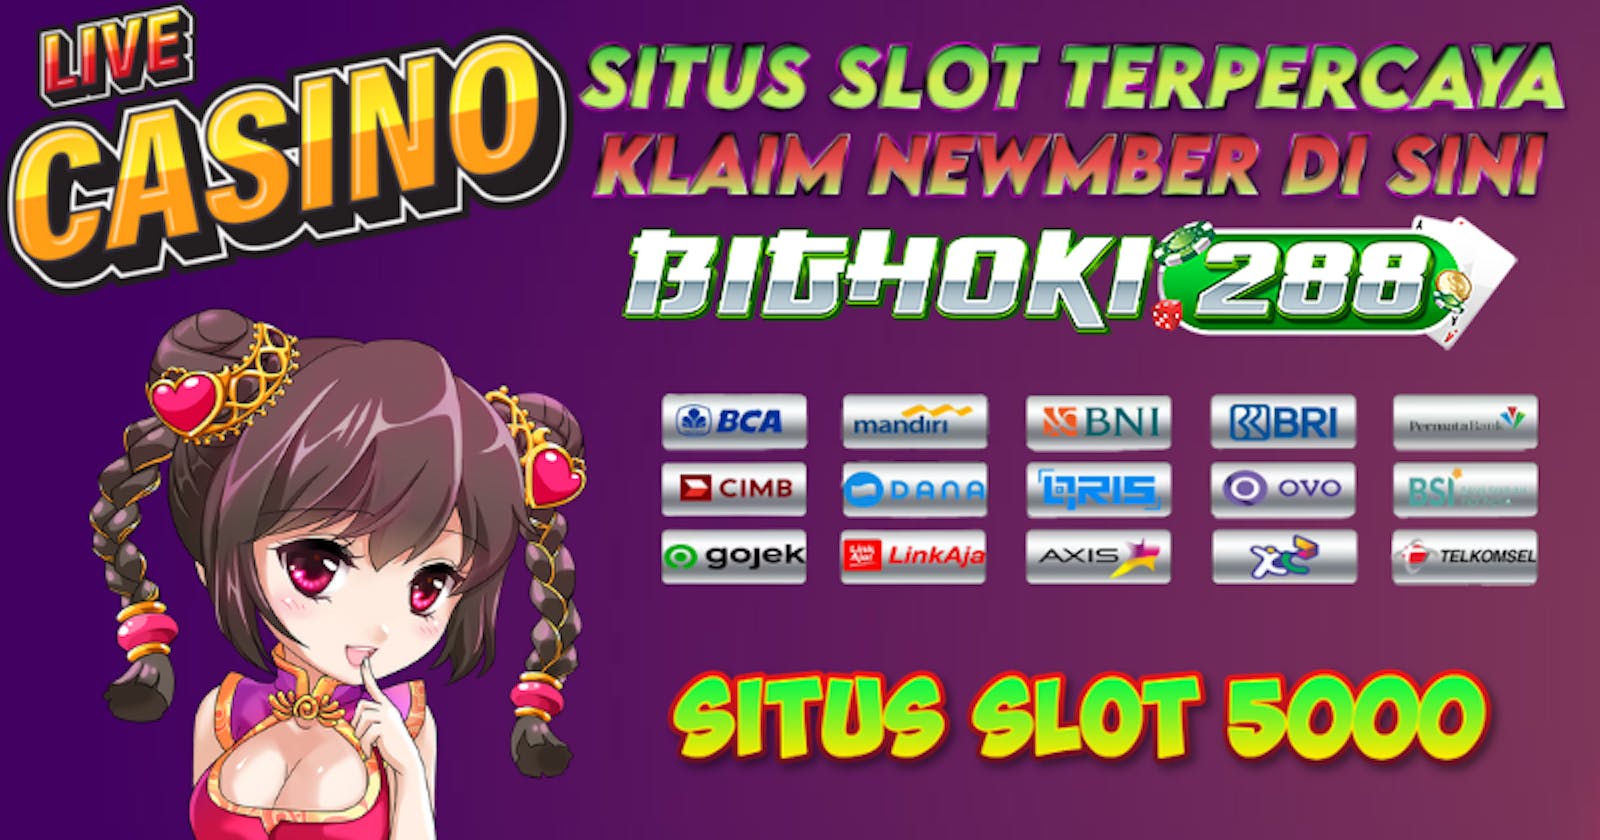 Deposit Slot Pulsa 5000 Tanpa Potongan Terbaru Bighoki288